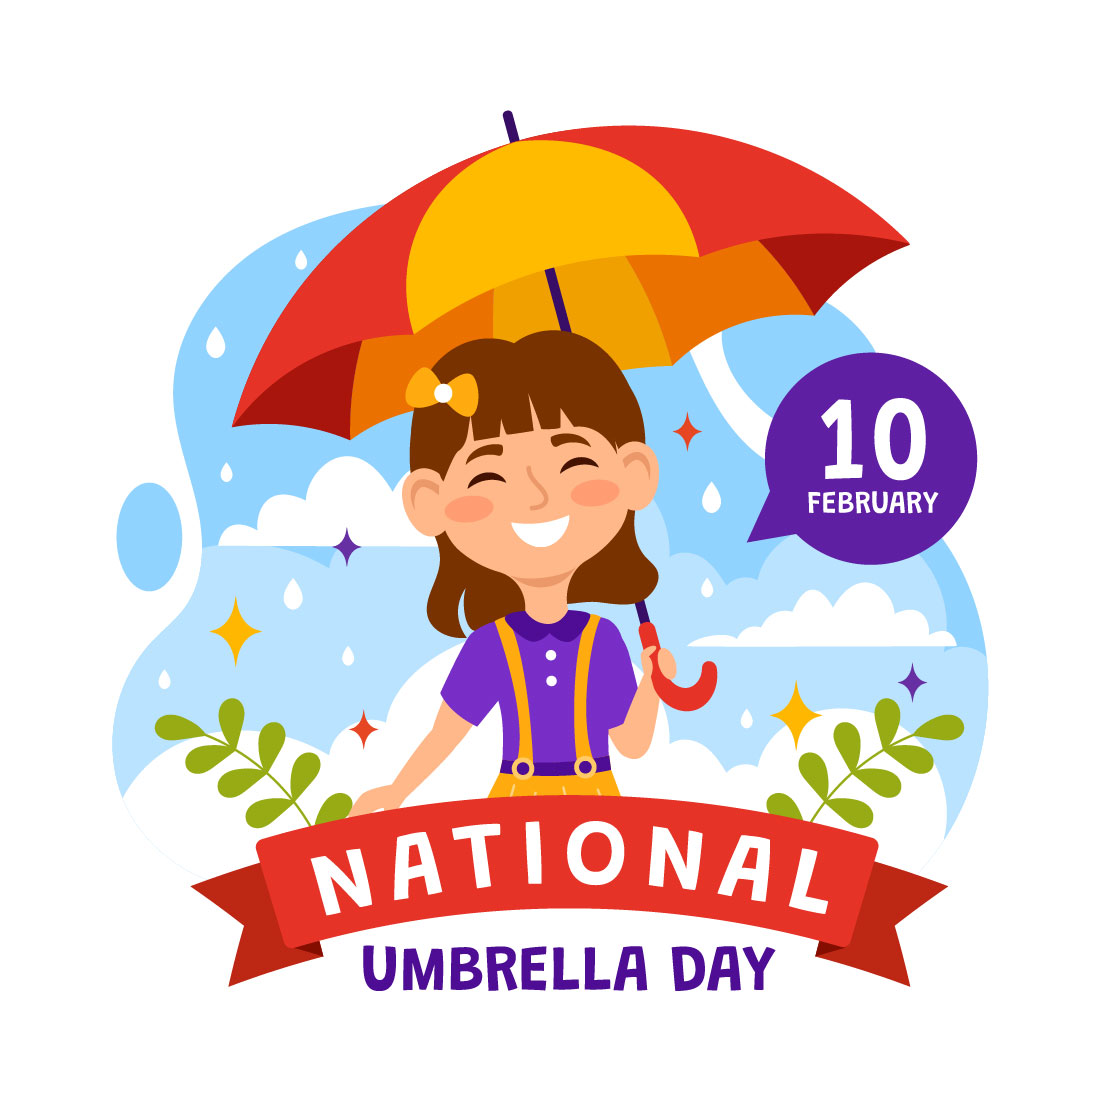 12 National Umbrella Day Illustration cover image.